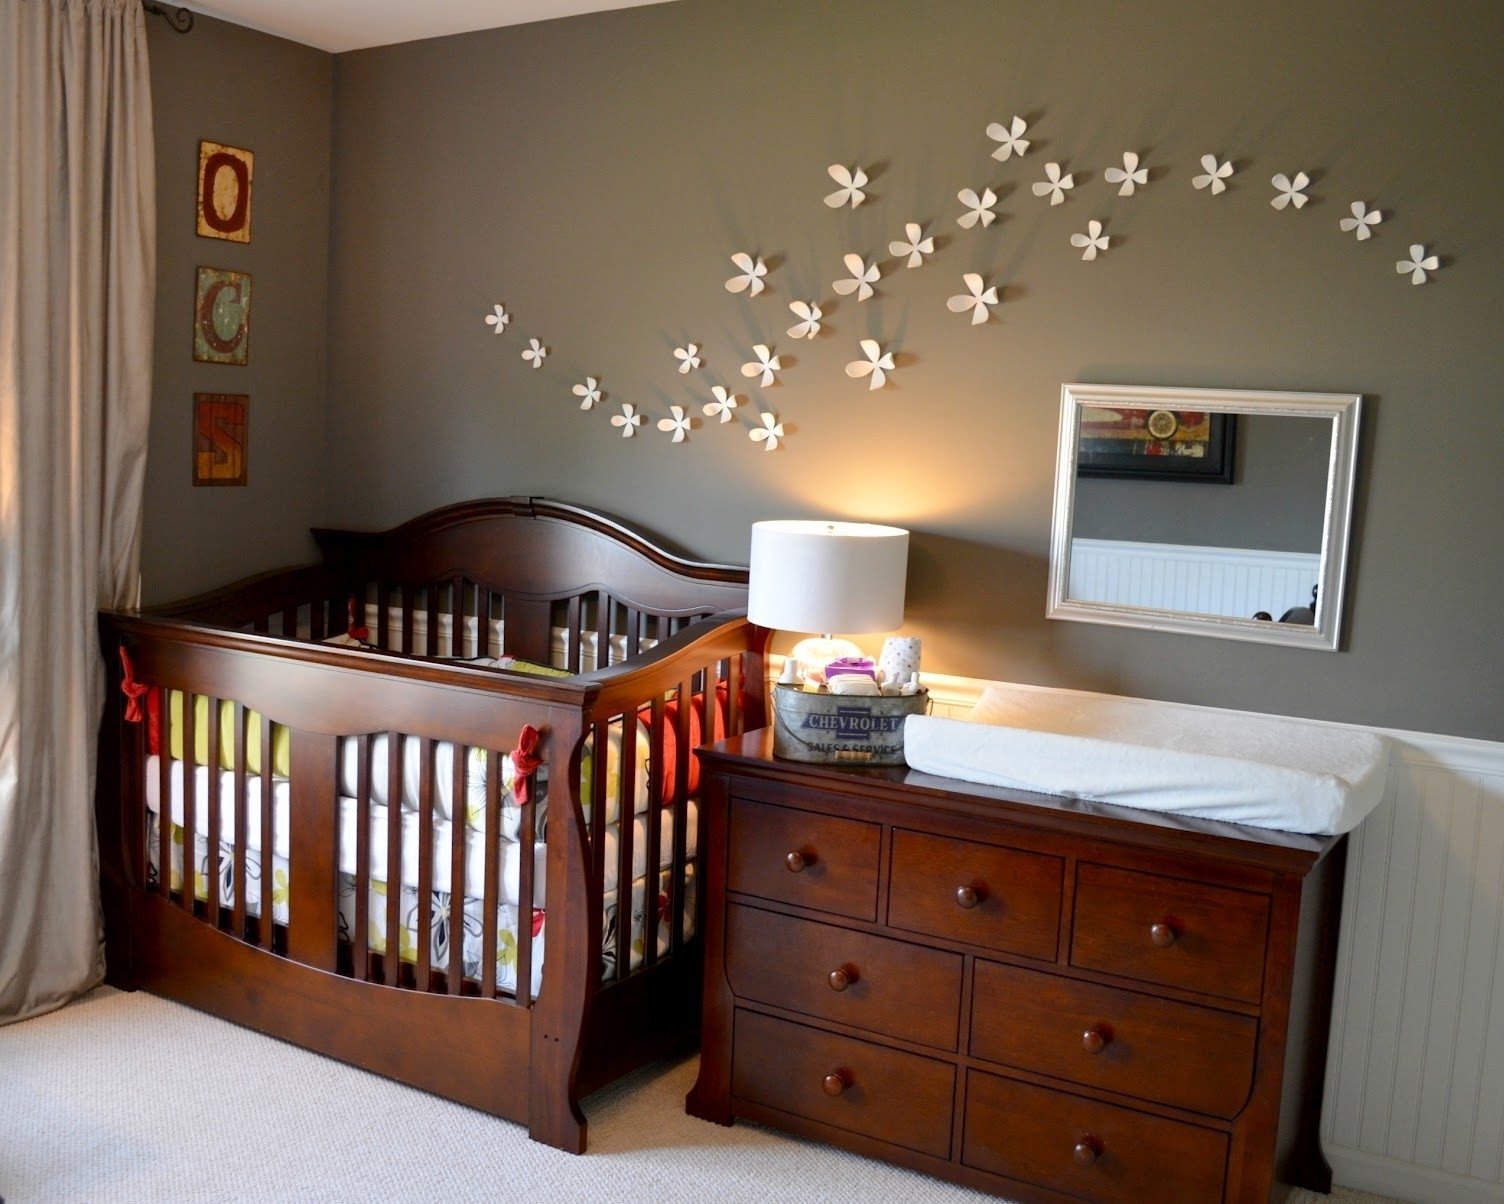 10 Lovable Baby Boy Room Decoration Ideas bedroom cute interior design for baby room ideas diy why soft 1 2022